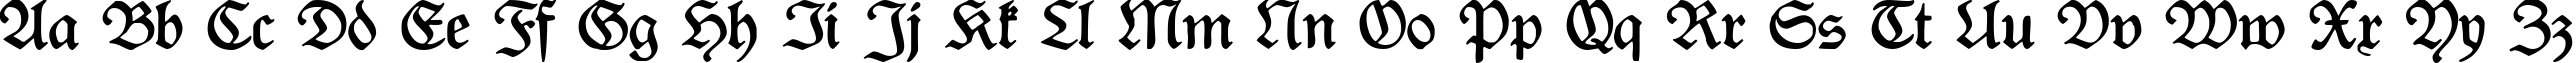 Пример написания английского алфавита шрифтом Rediviva